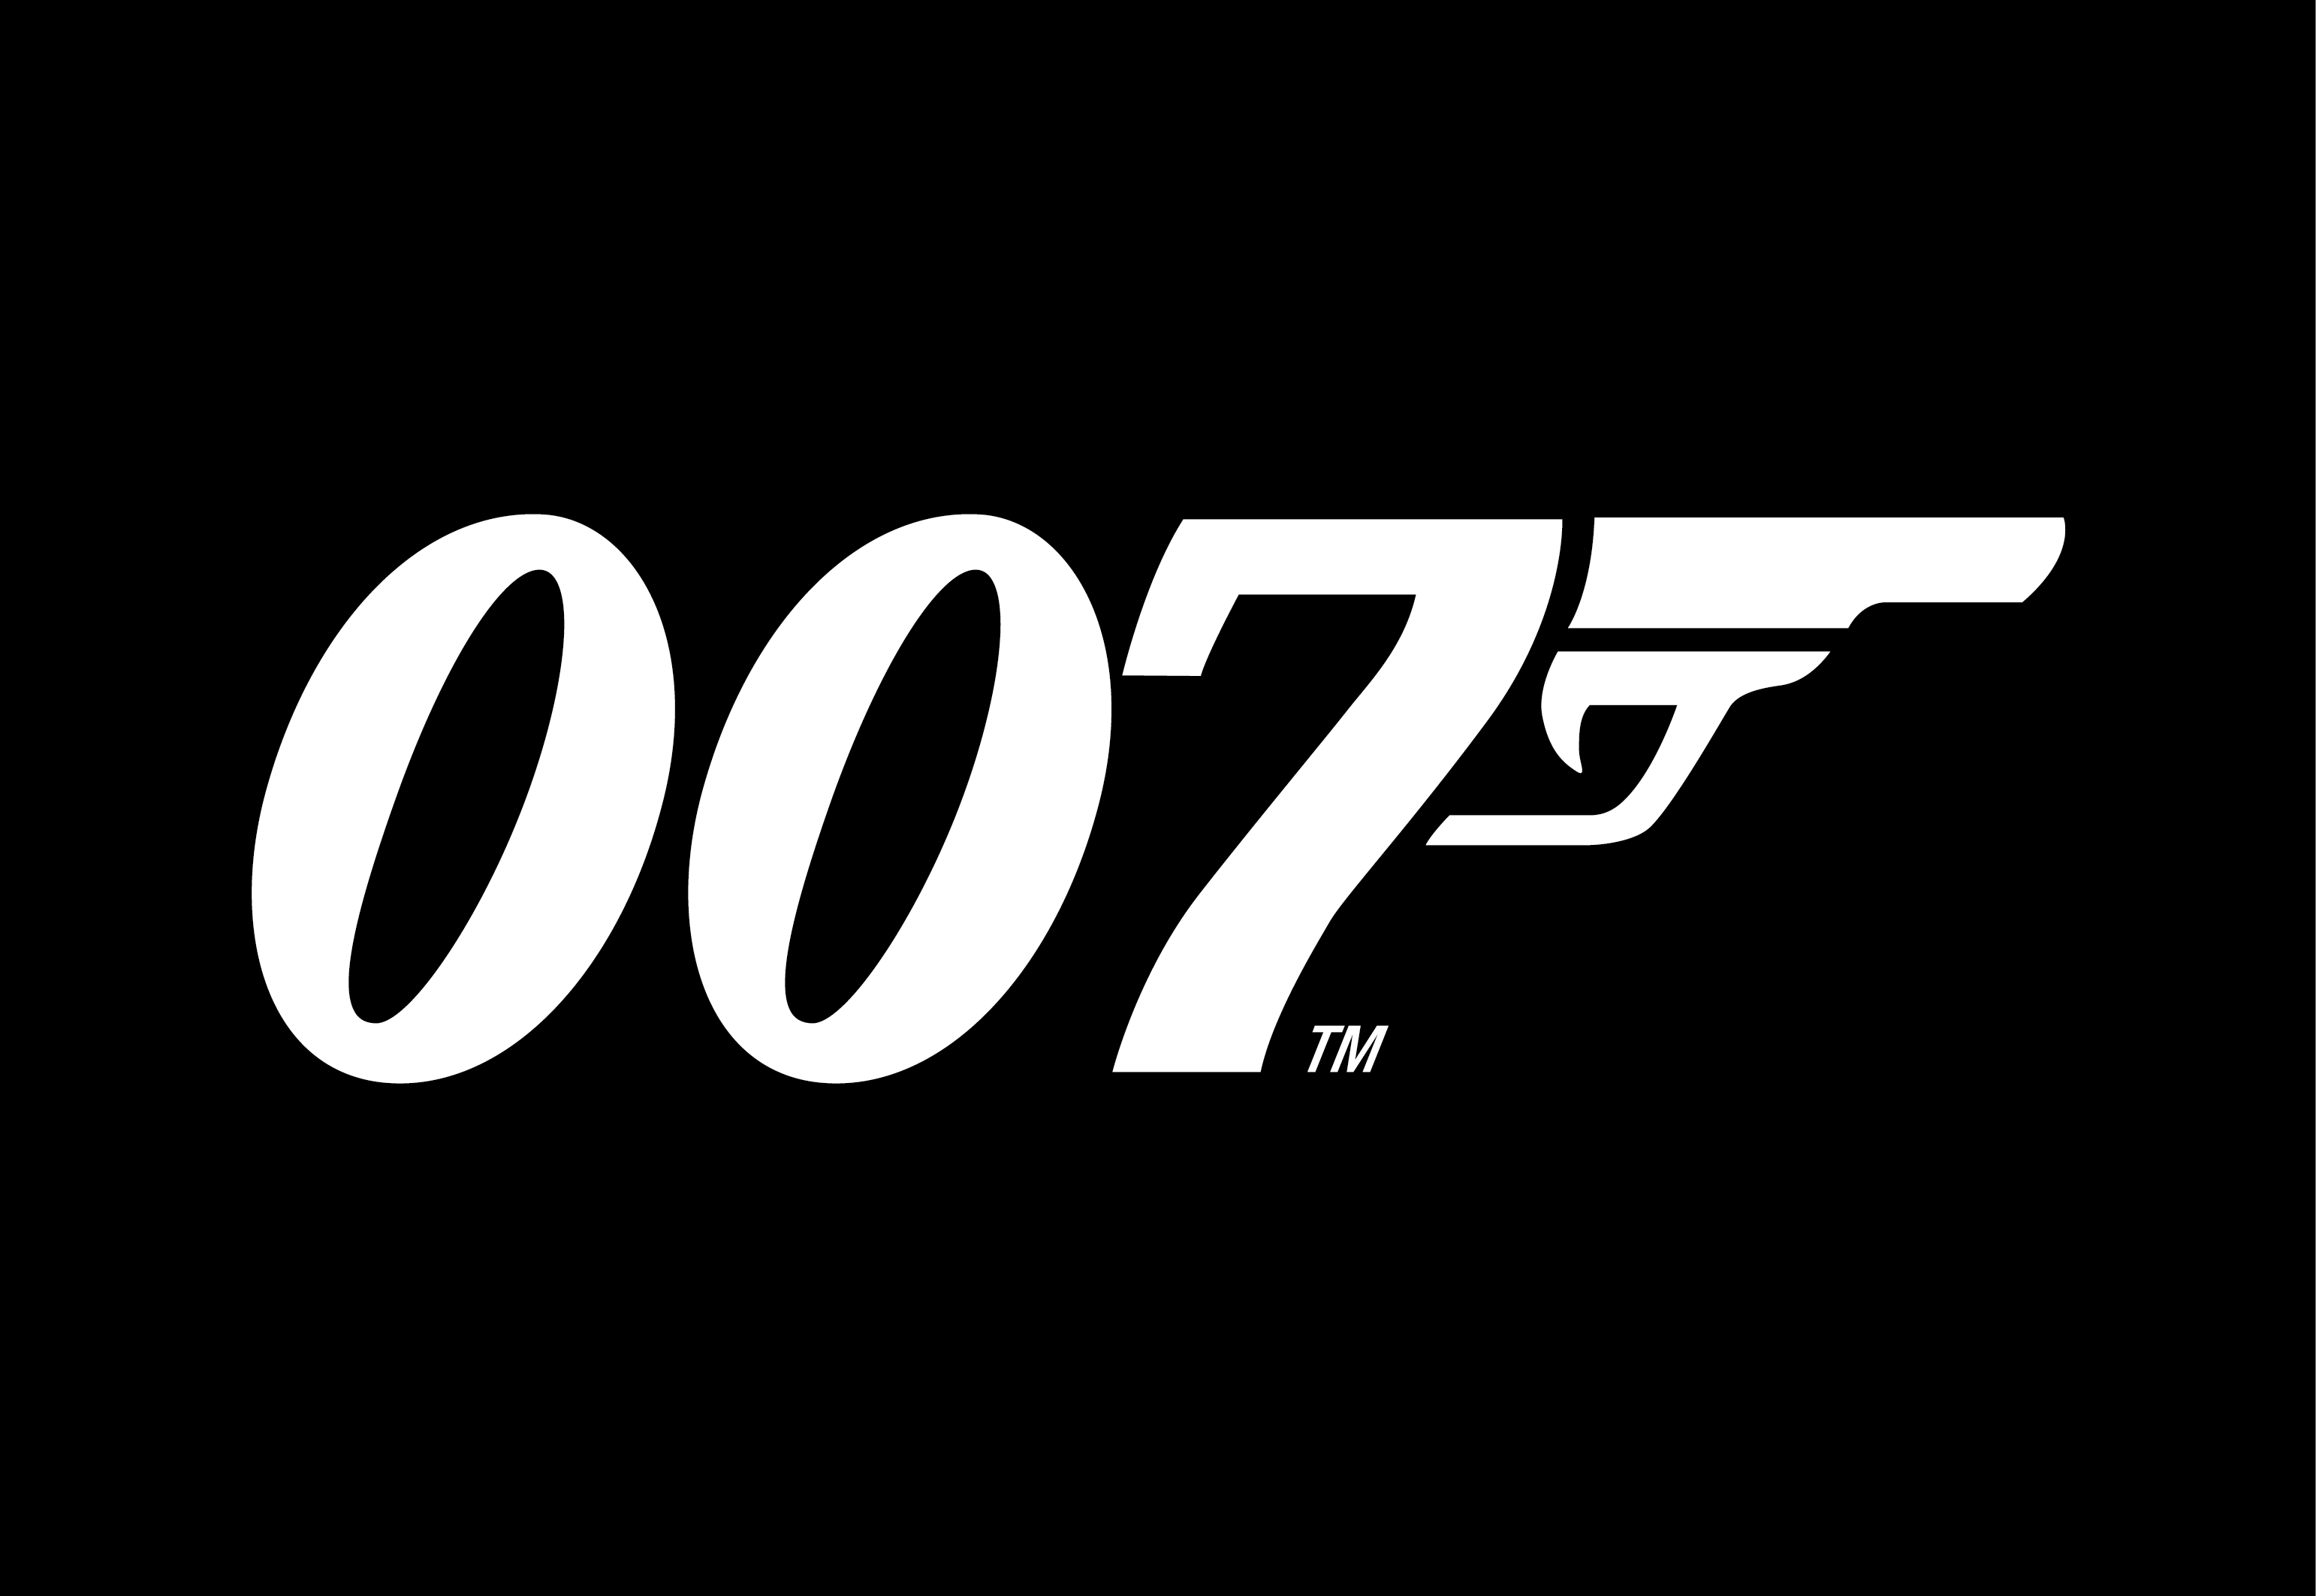 James Bond cars allegedly coming to Forza Horizon 4 - Team VVV.